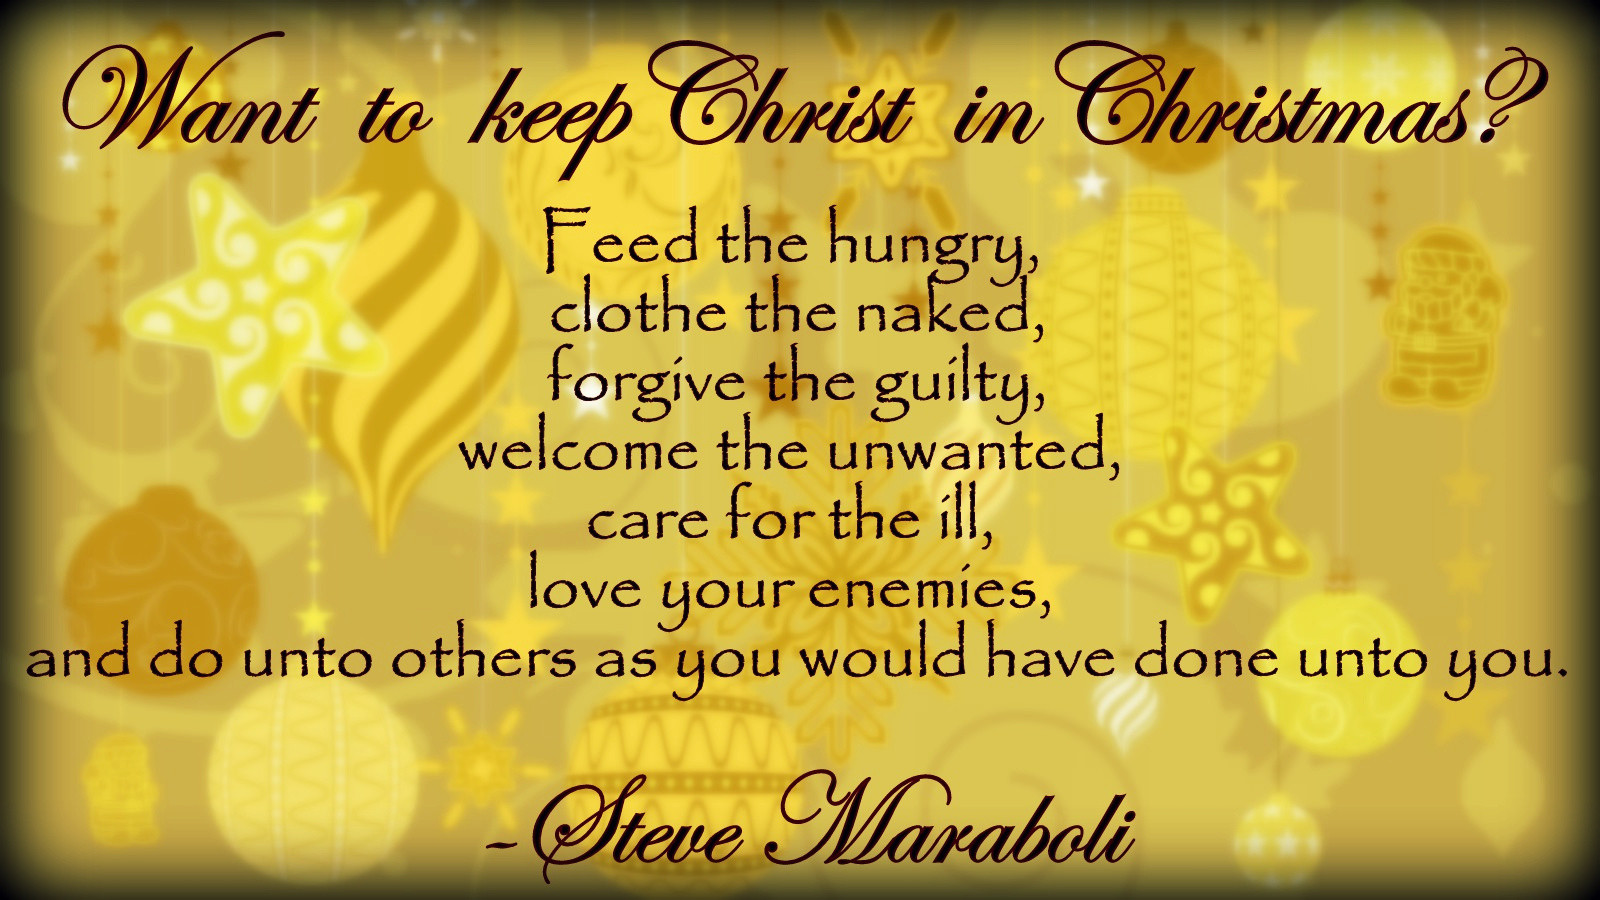 Keep Christ In Christmas Quotes
 Dr Steve Maraboli Christ in Christmas